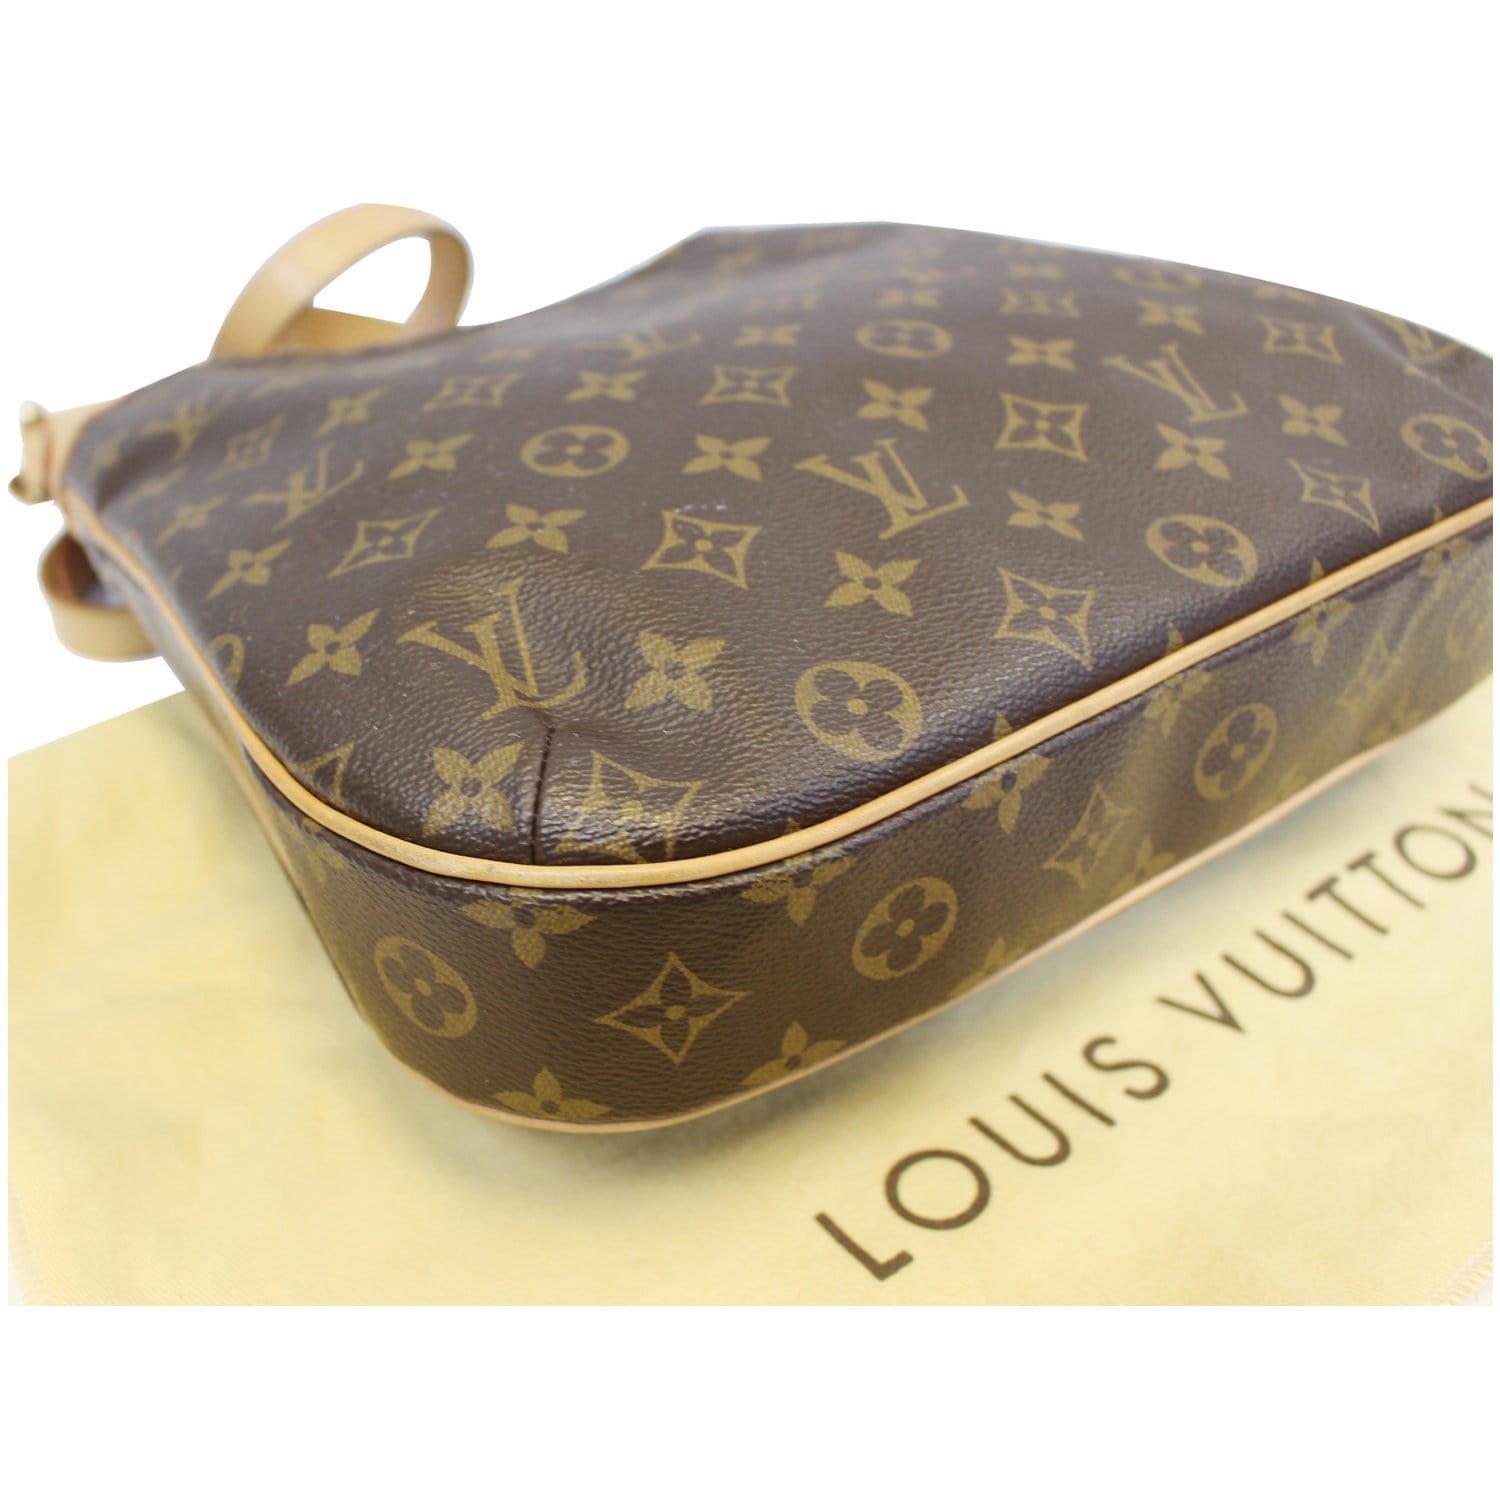 vuitton+lv+odeon.bmp (image)  Louis vuitton handbags crossbody, Louis vuitton  odeon, Louis vuitton handbags